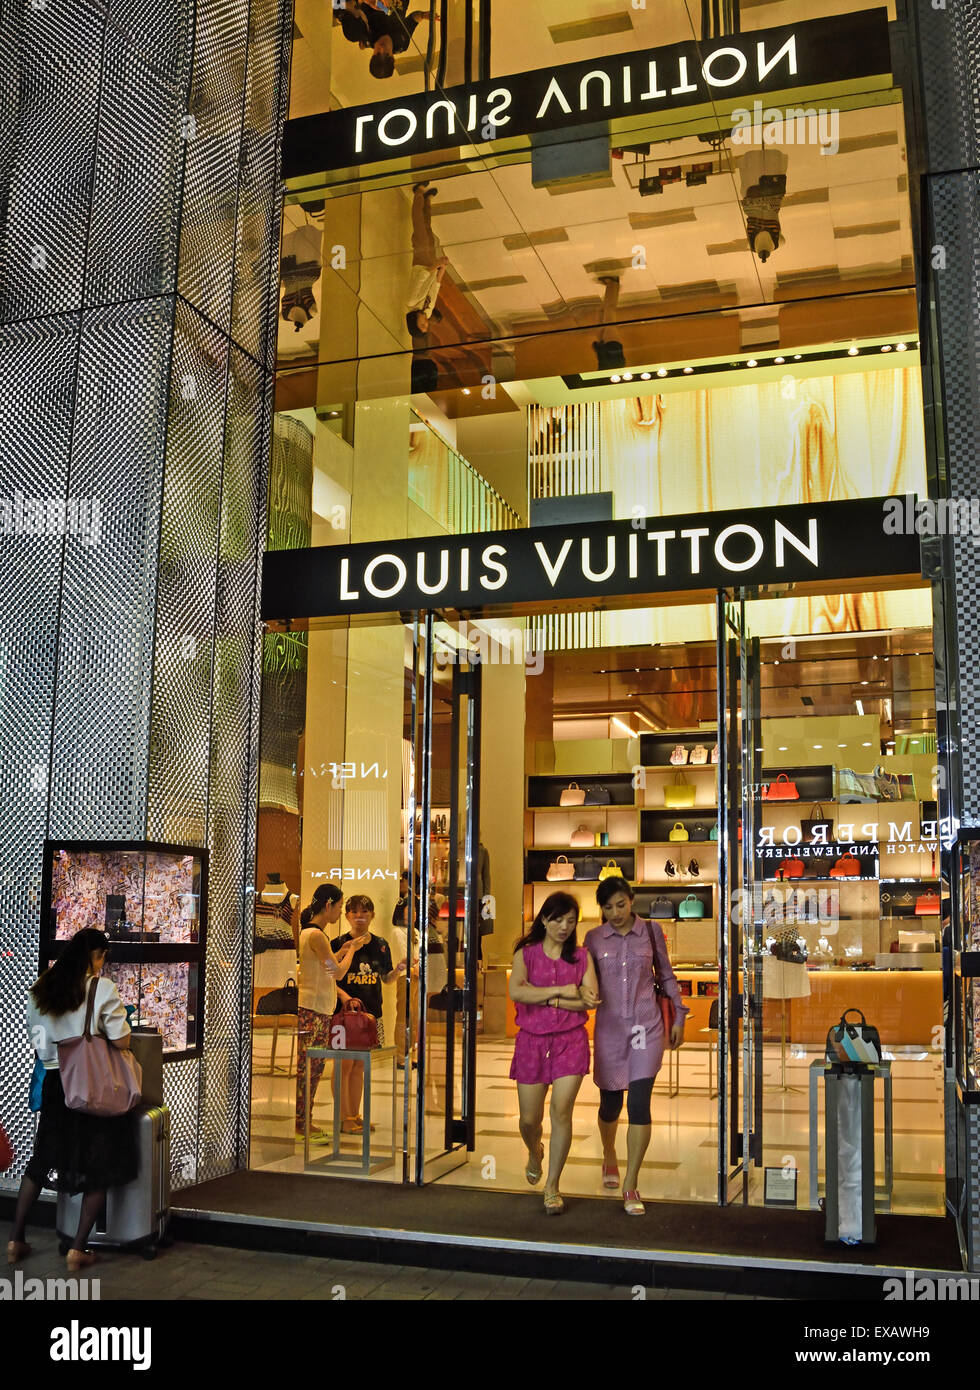 1,322 Louis Vuitton Hong Kong Stock Photos, High-Res Pictures, and